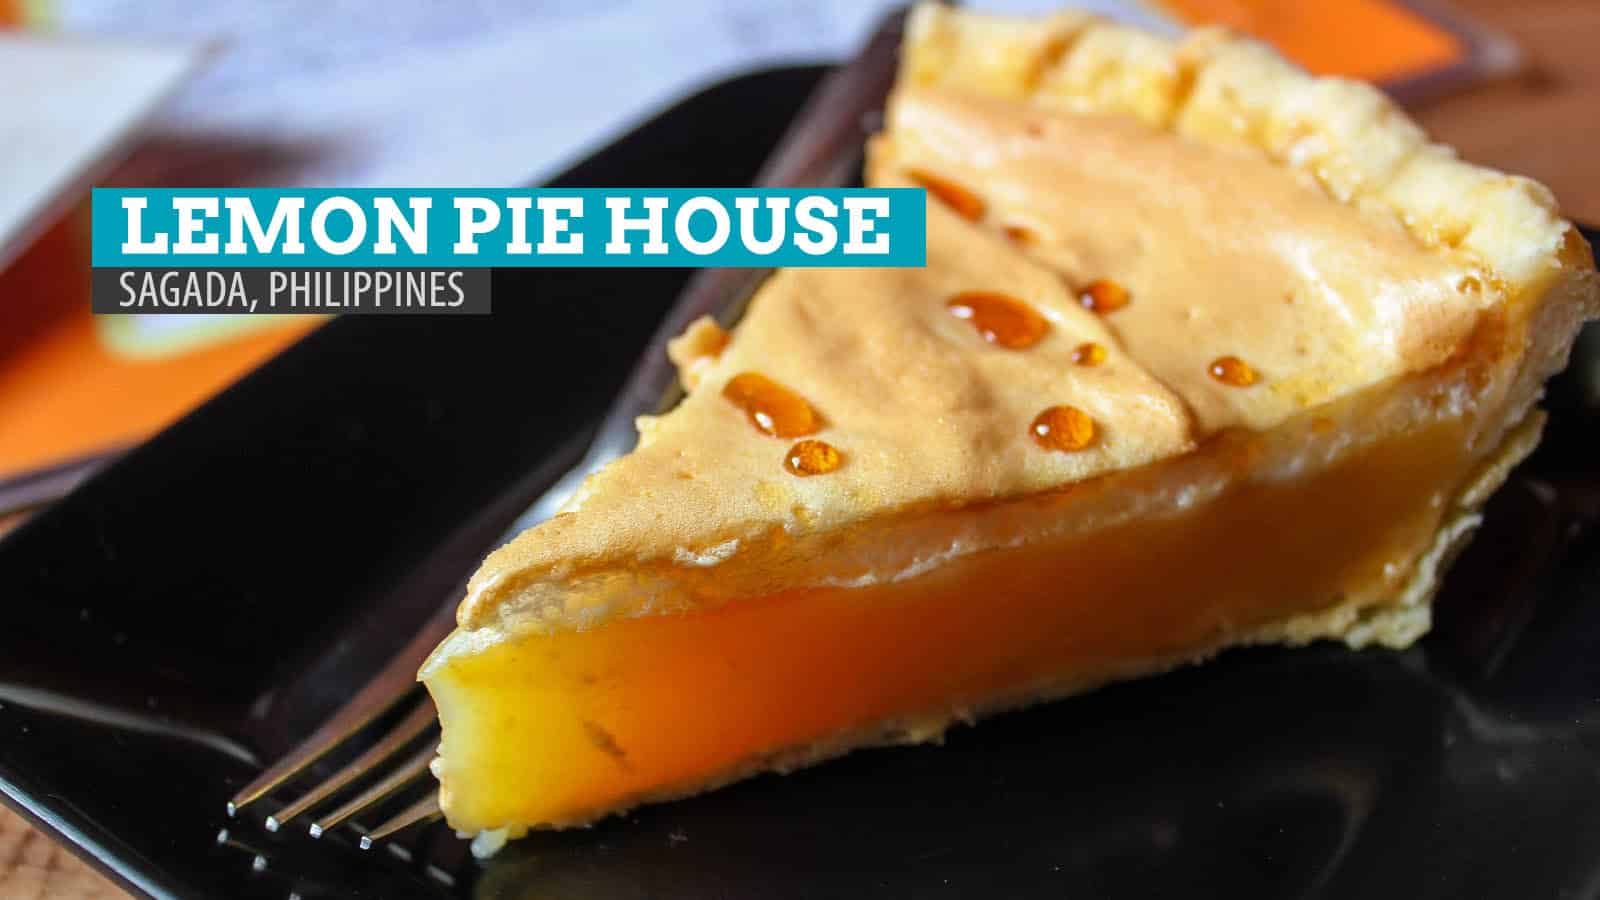 Lemon Pie House: Where to Eat in Sagada, Philippines